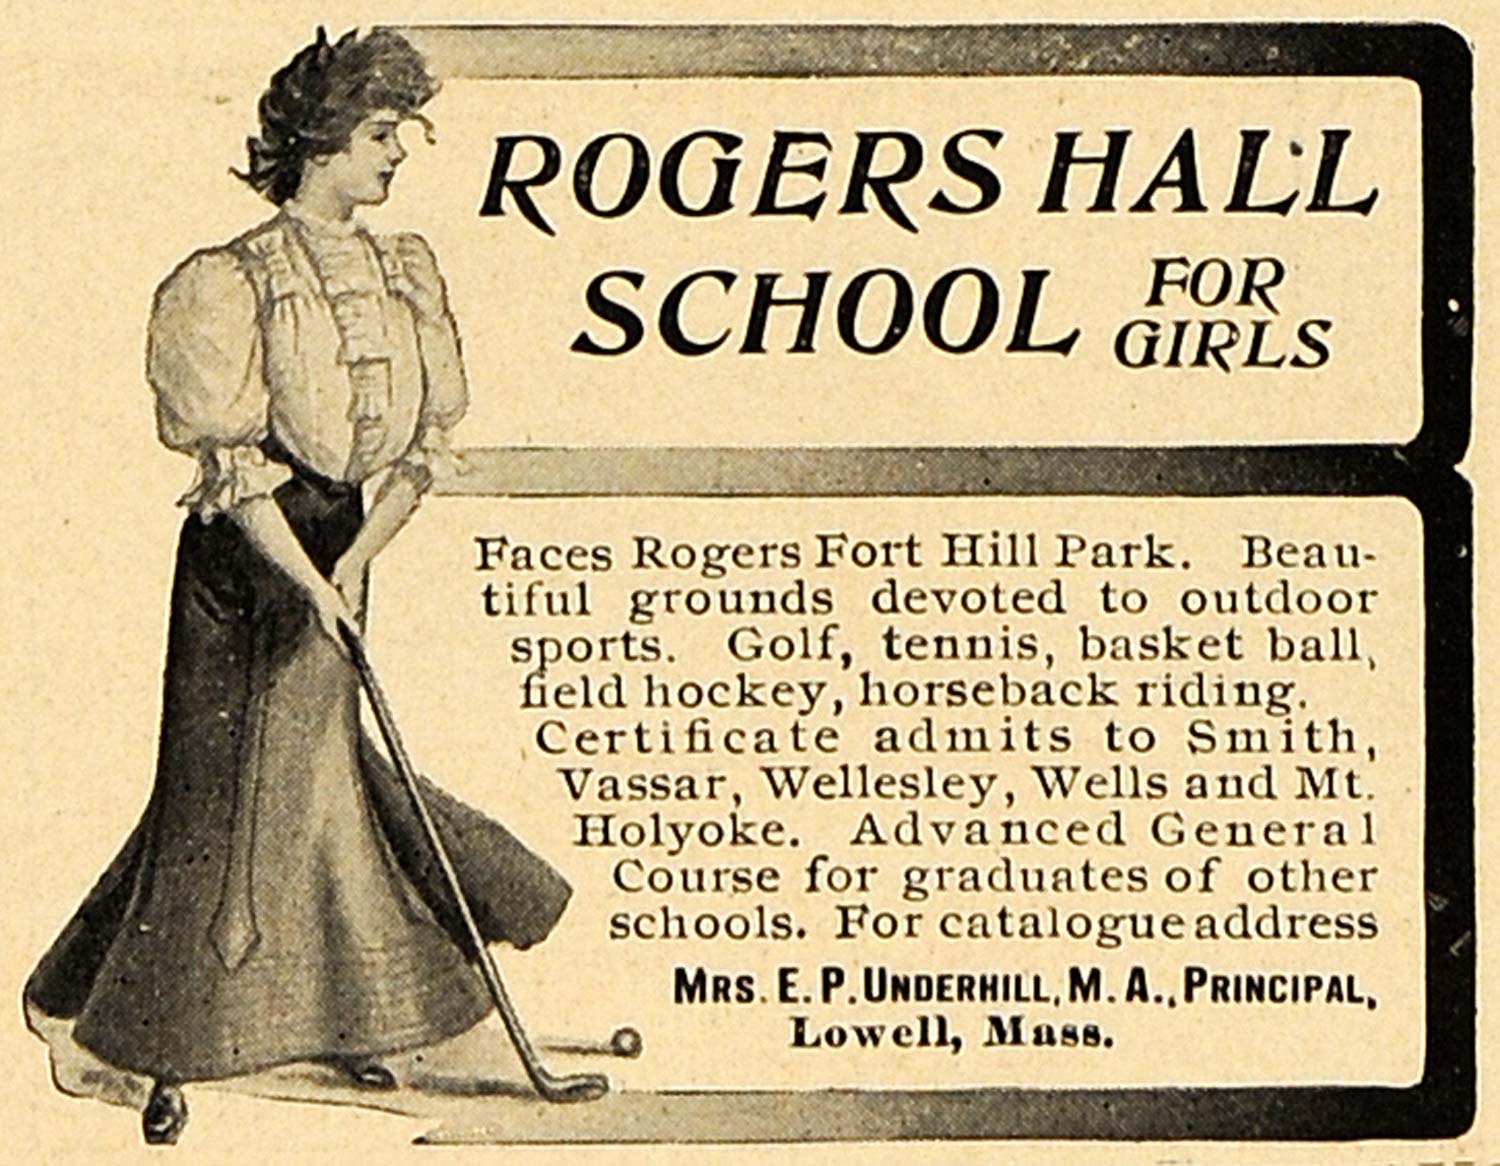 1906 Ad Rogers Hall School Girls Golfing Massachusetts - ORIGINAL CL9